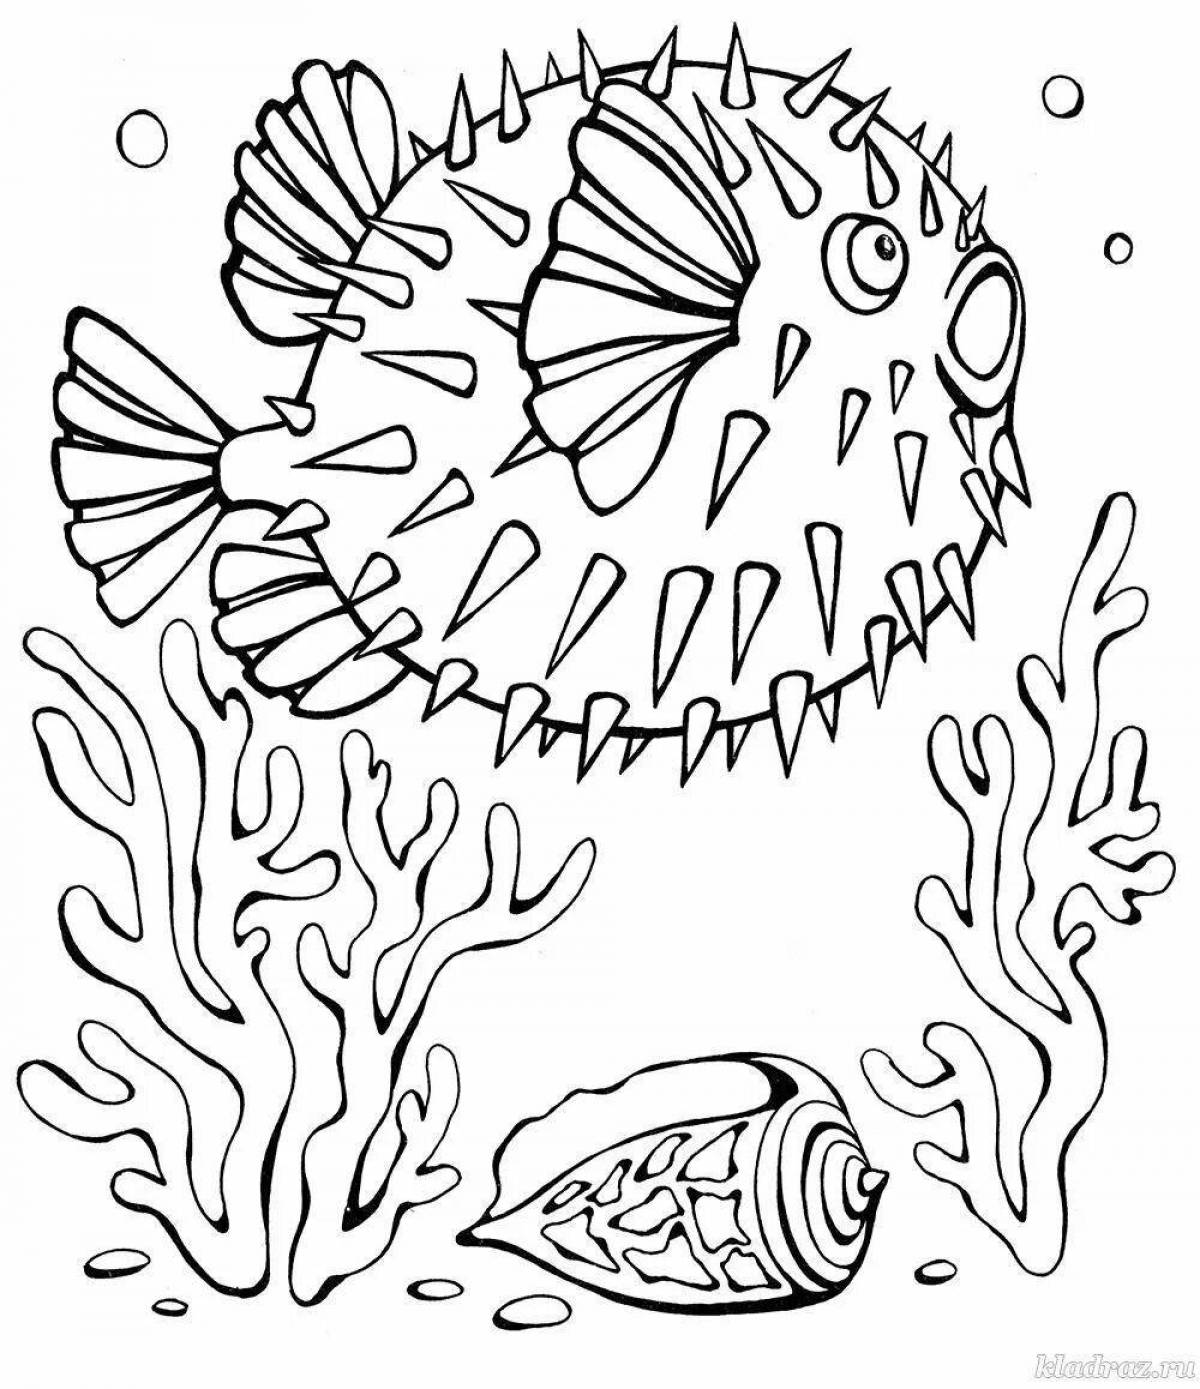 Fancy coloring hedgehog fish